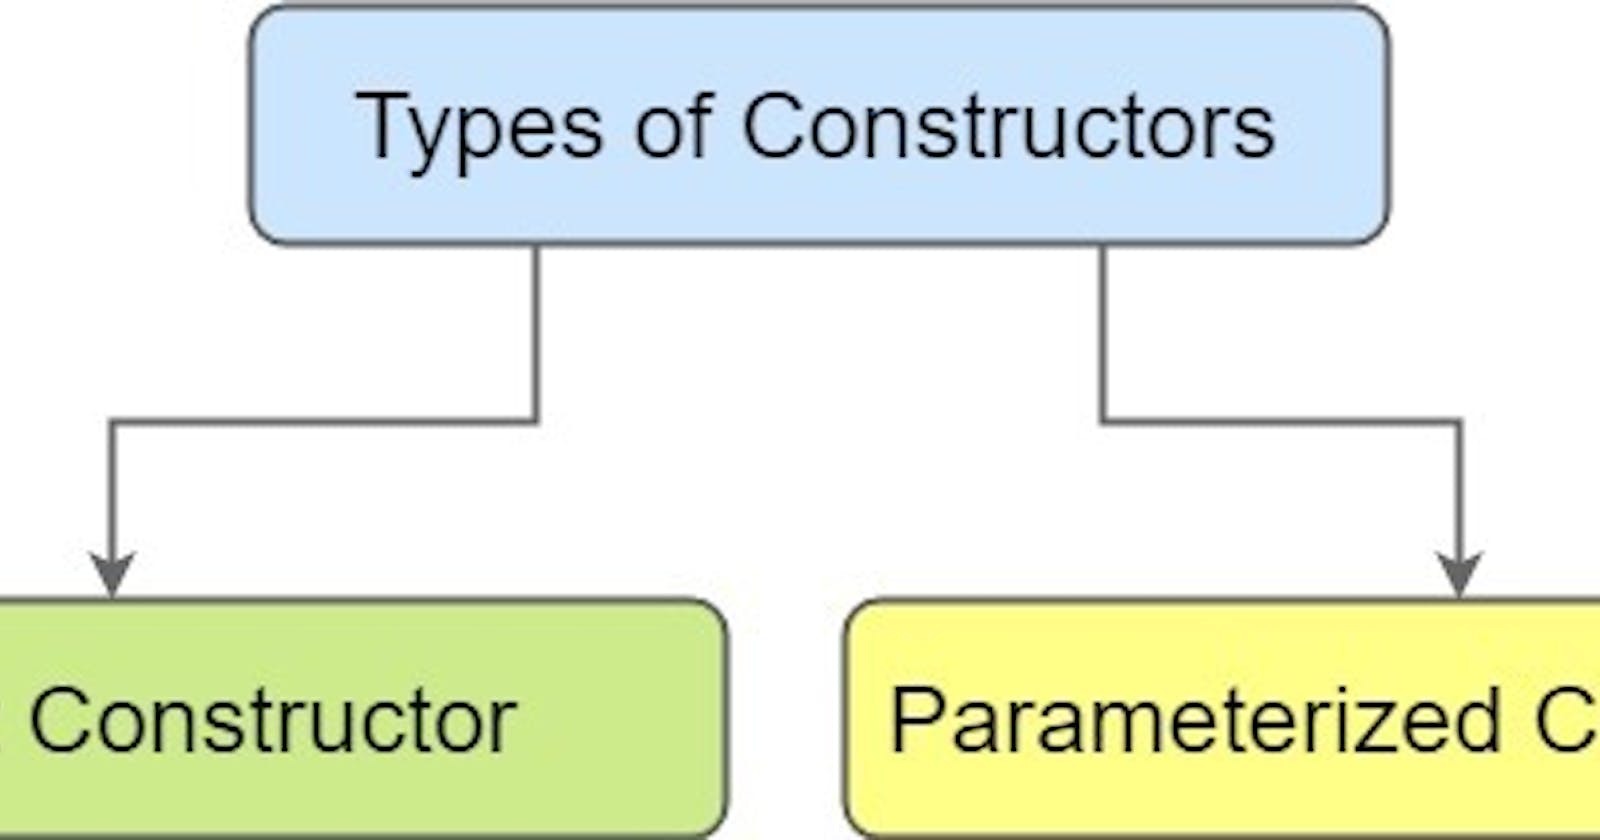 Constructor in Java